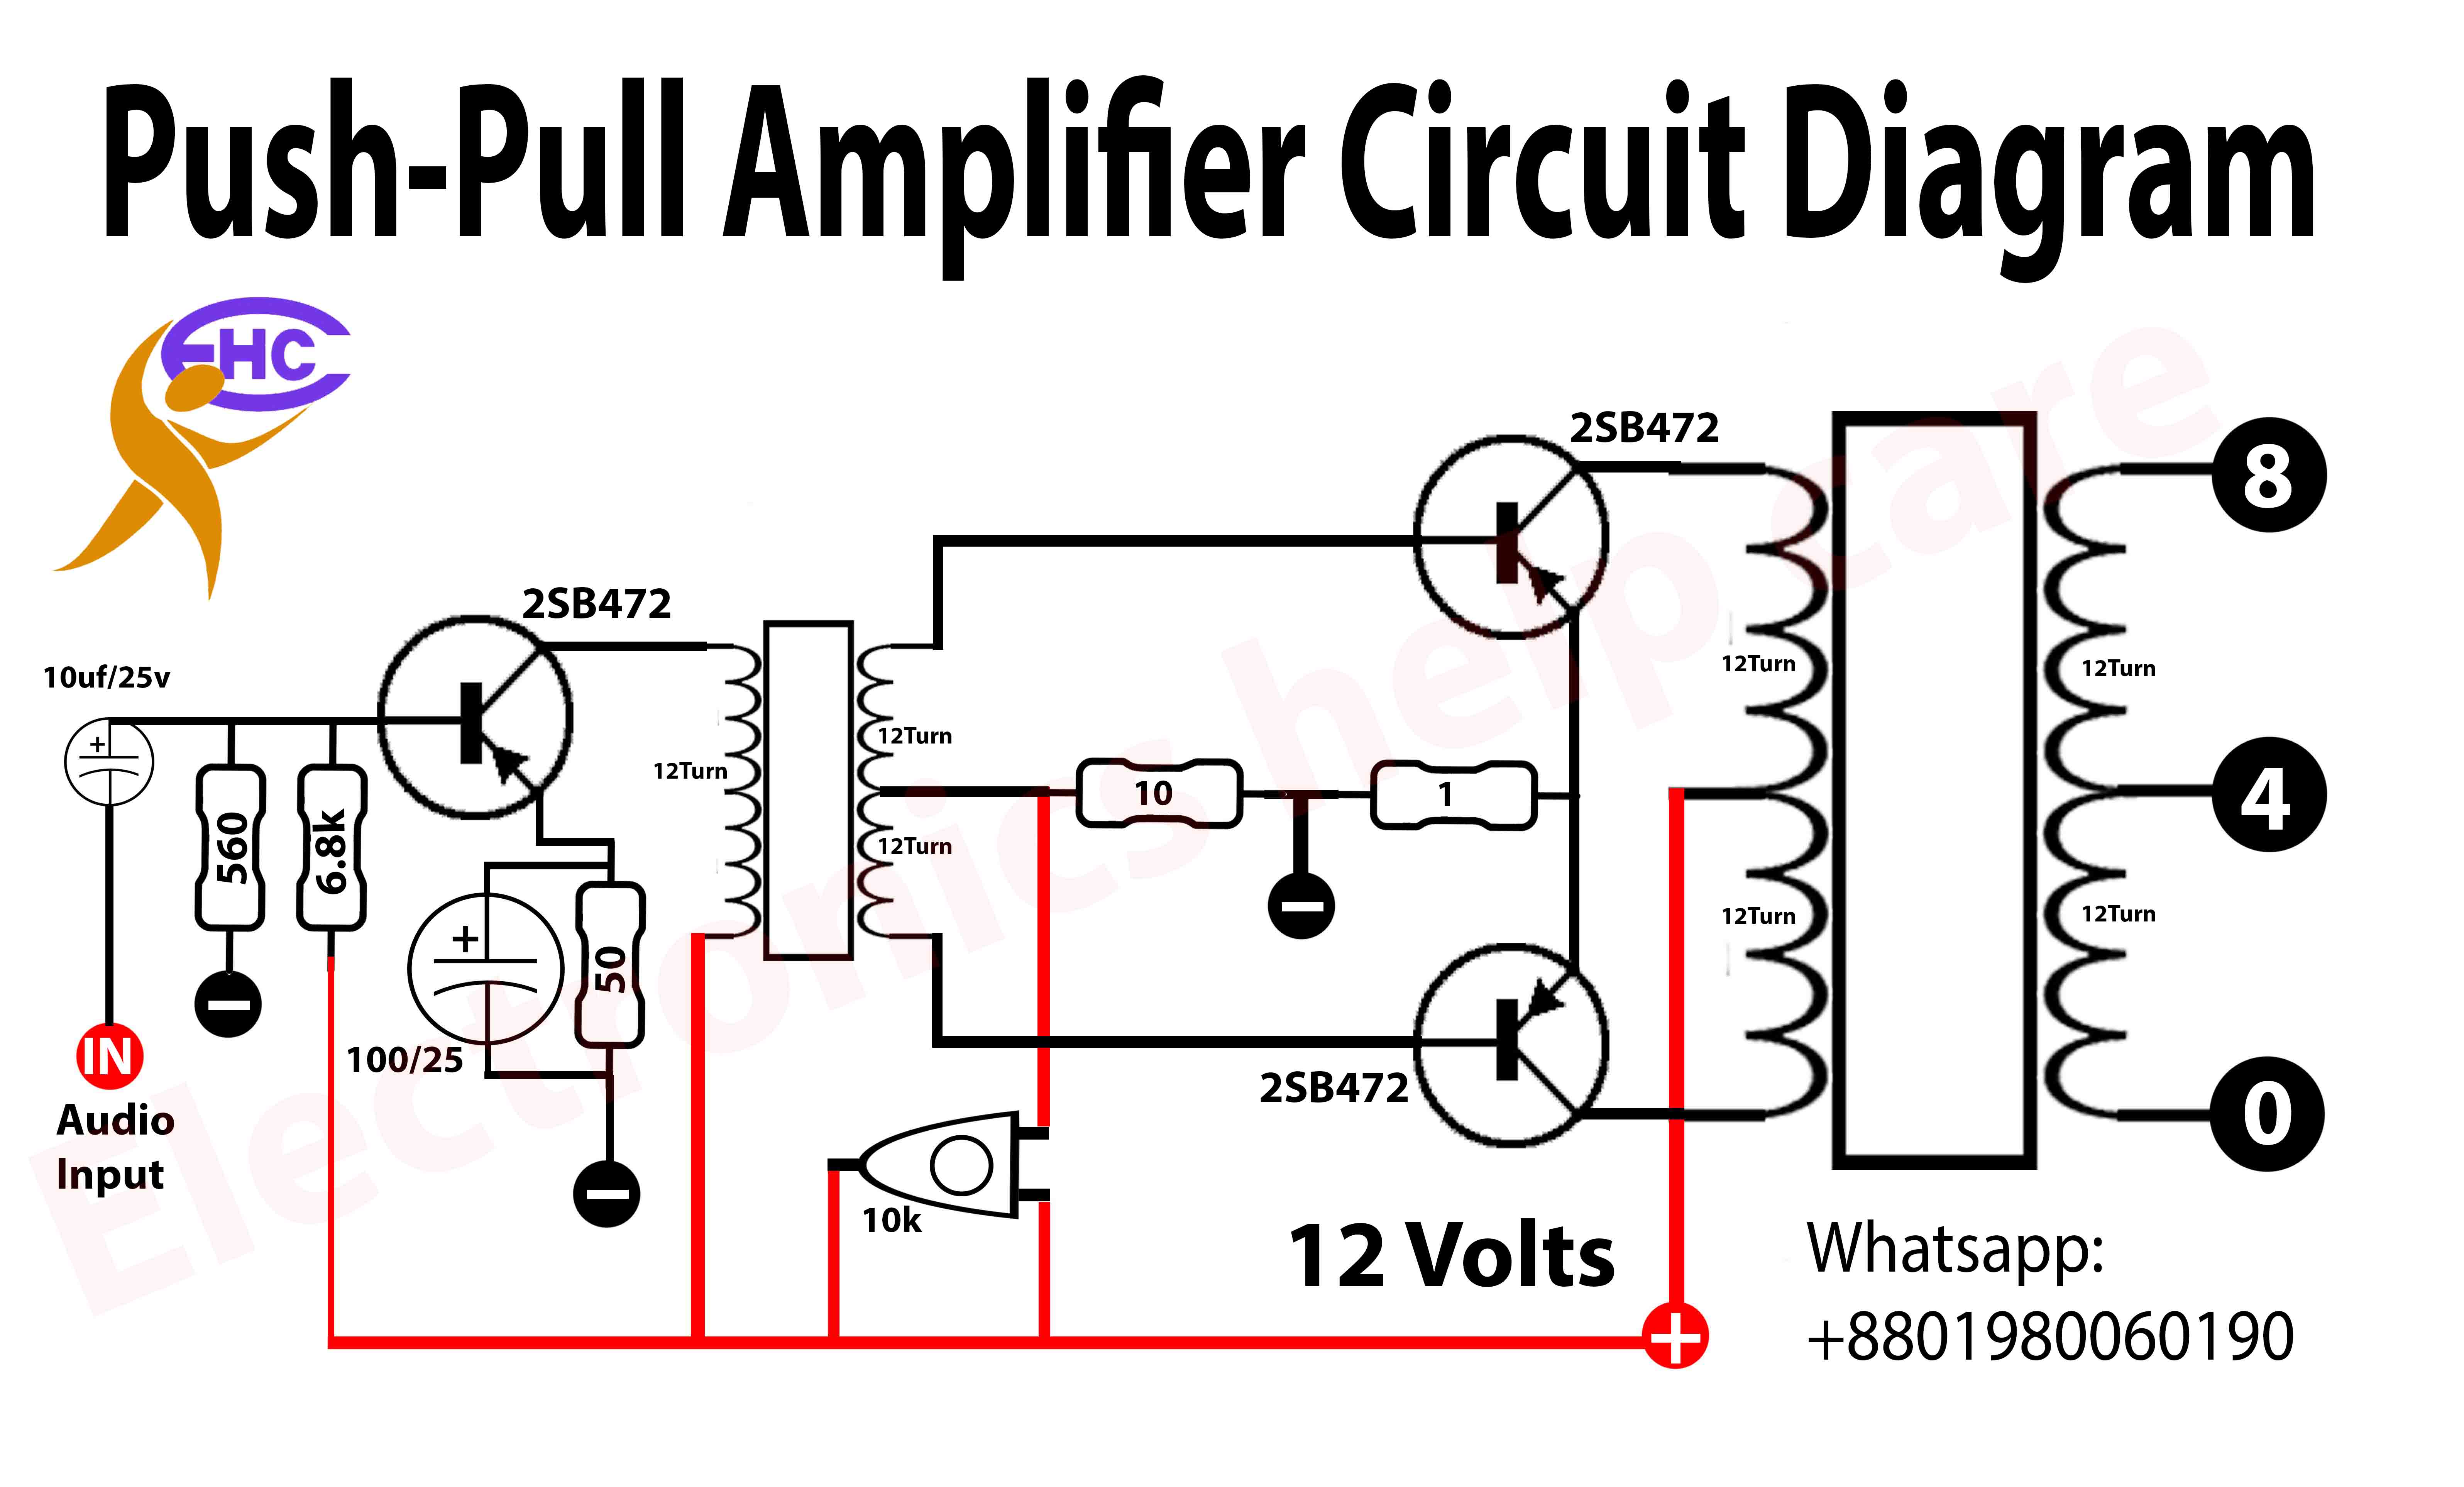 Push pull amplifier circuit diagram